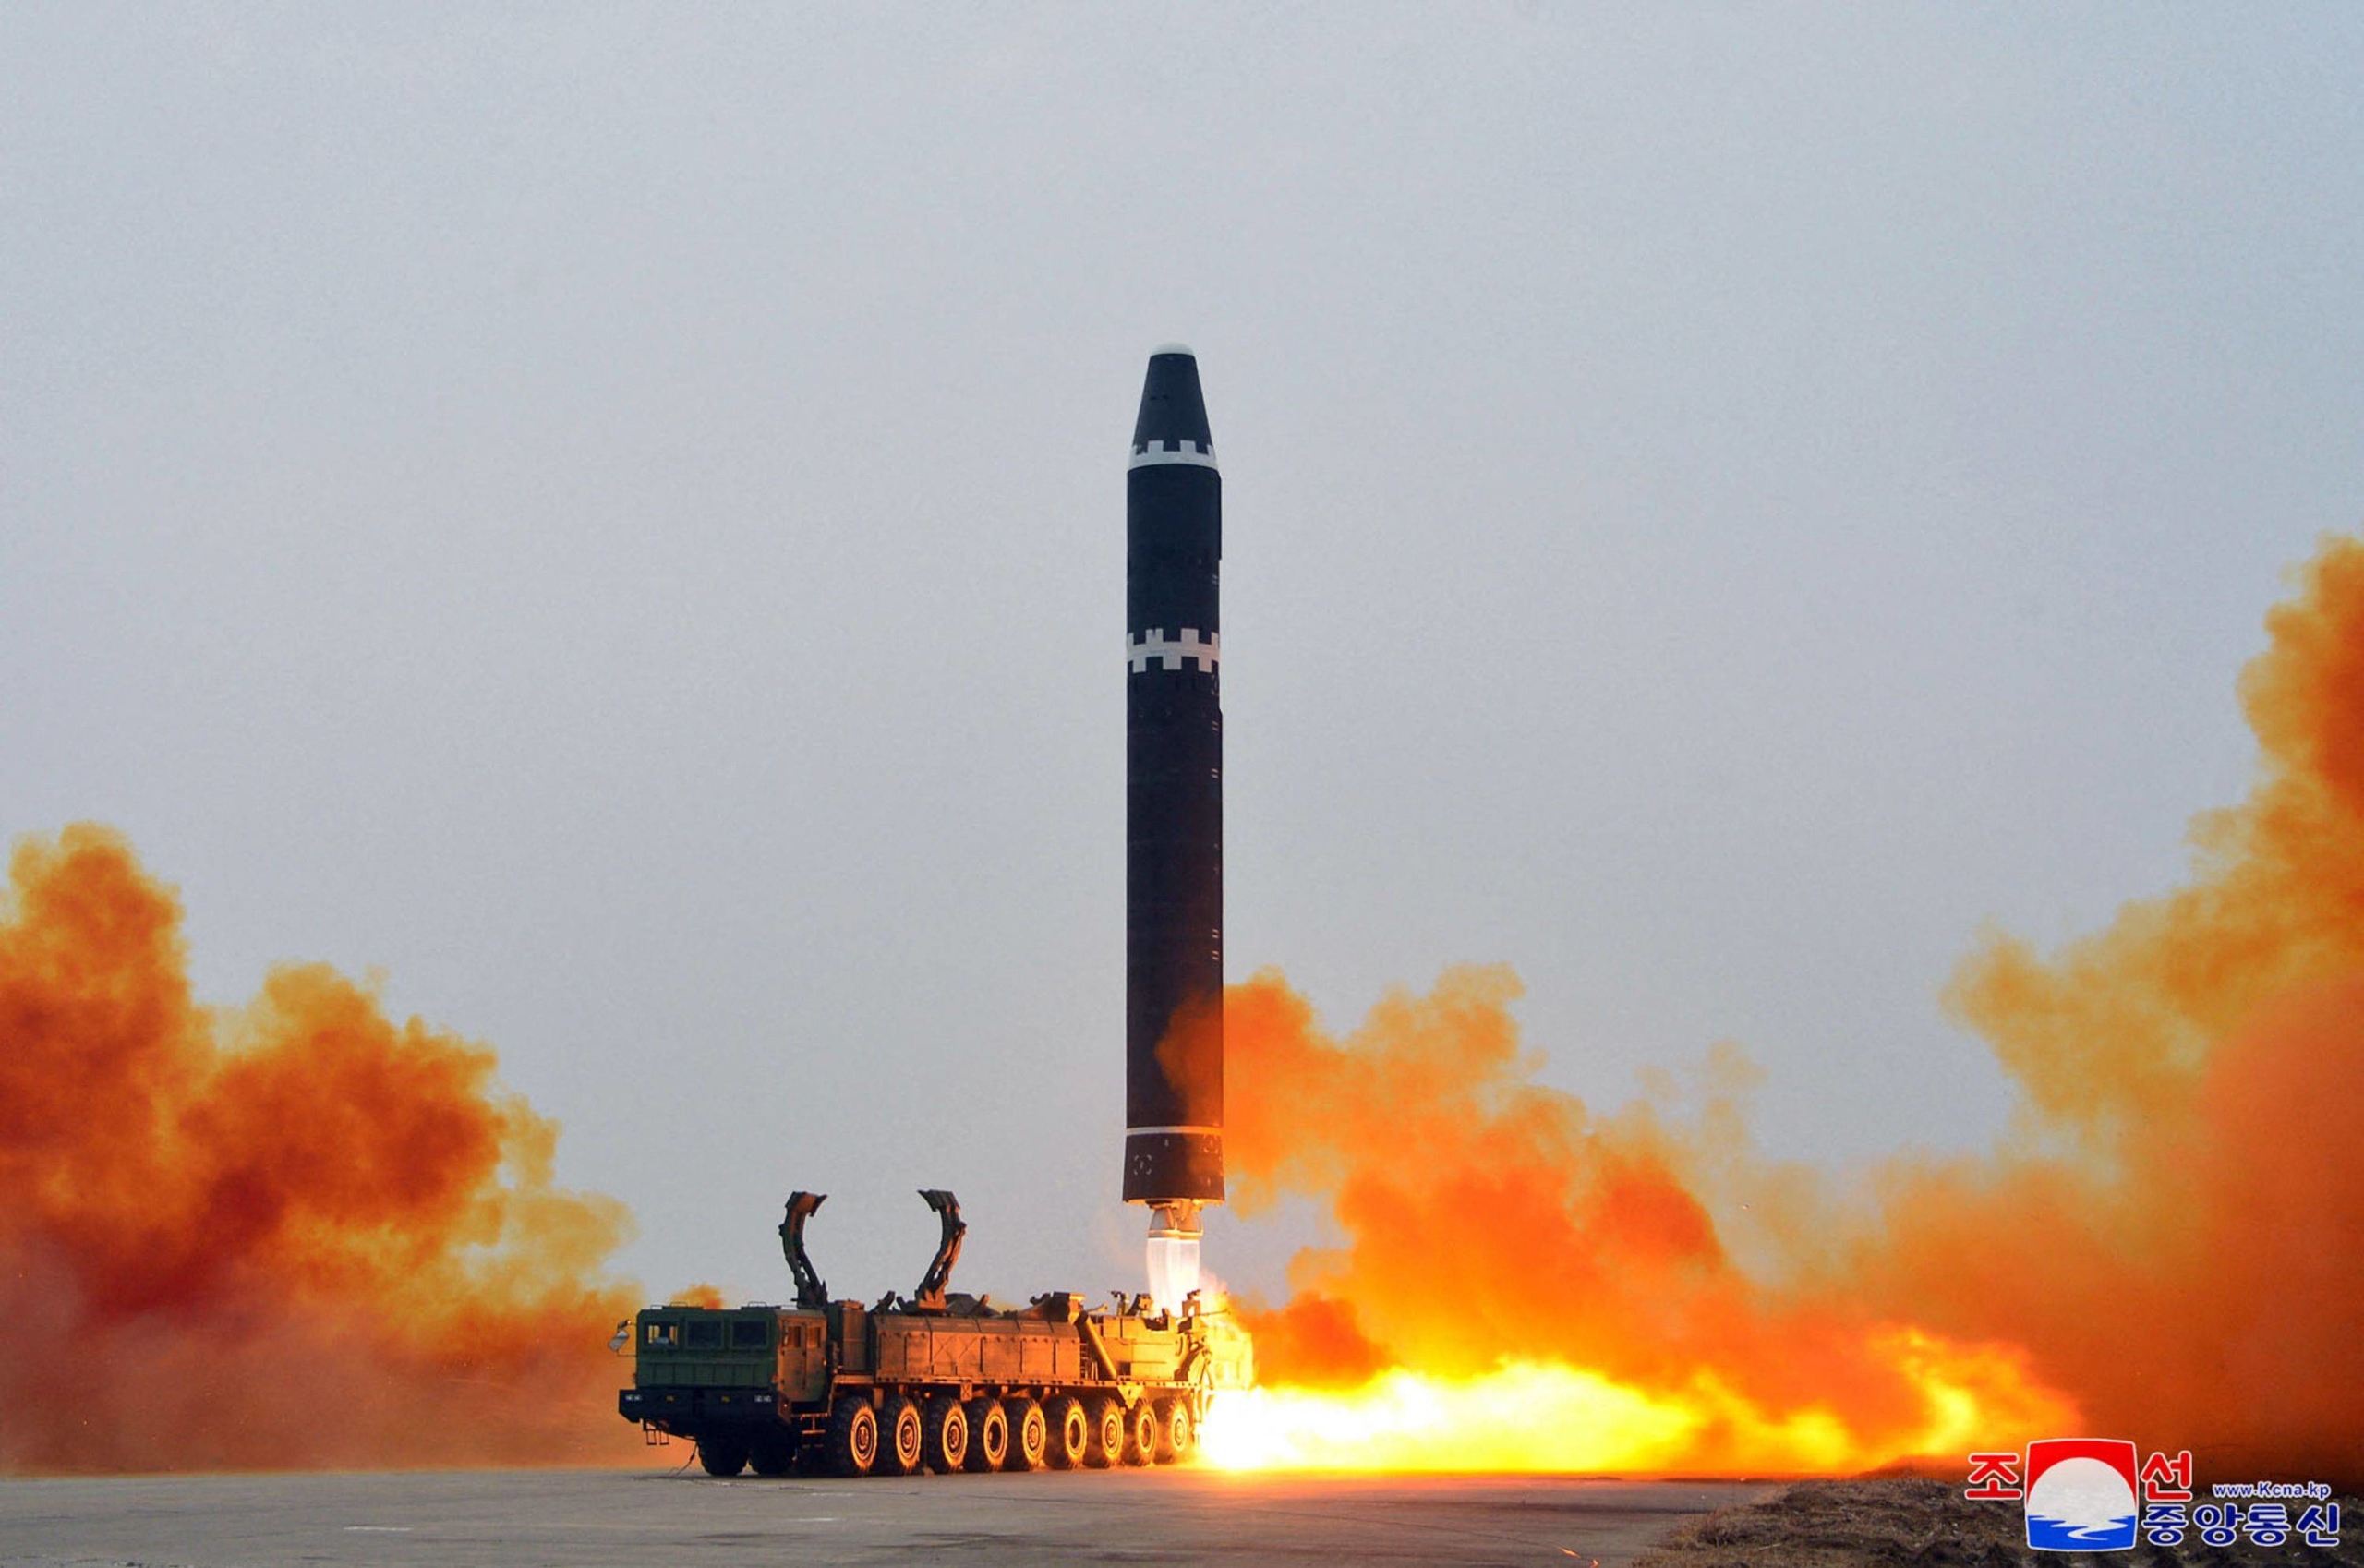 North Korea Confirms Test of Hwasong-15 Intercontinental Ballistic Missile